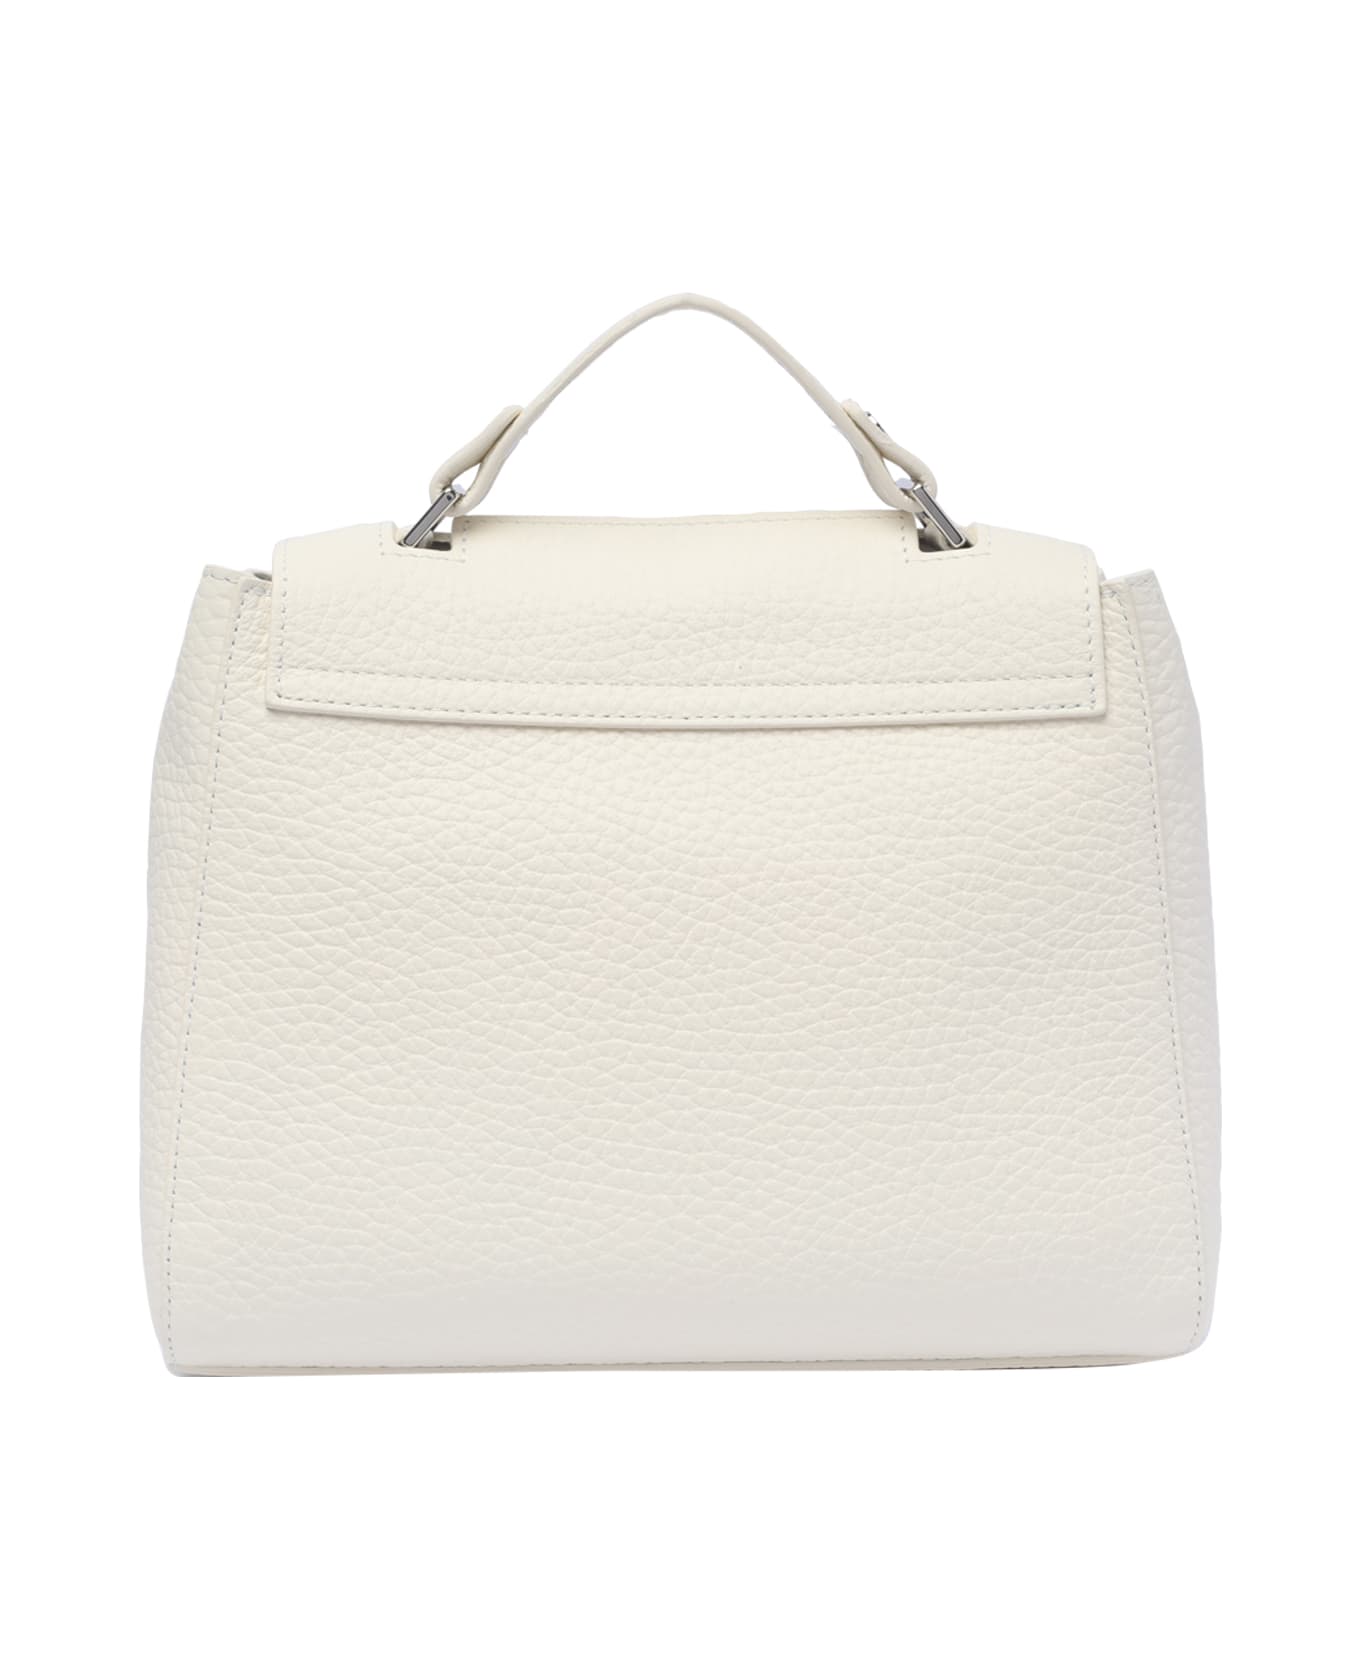 Orciani Soft Sveva Handbag - White